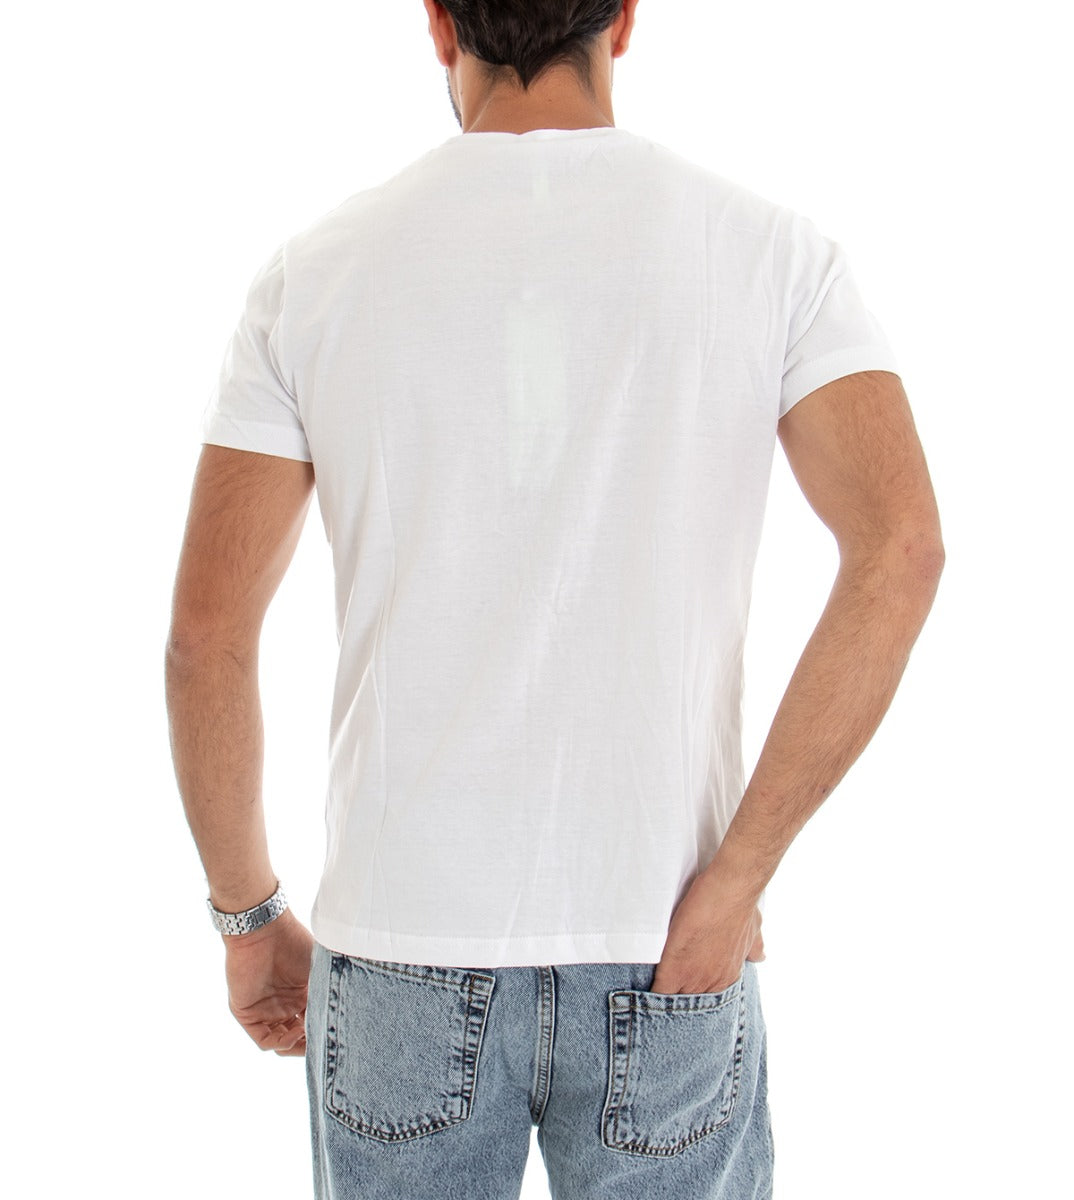 T-shirt Uomo Maglia Manica Corta Slim Stampa Fondo Bianco GIOSAL